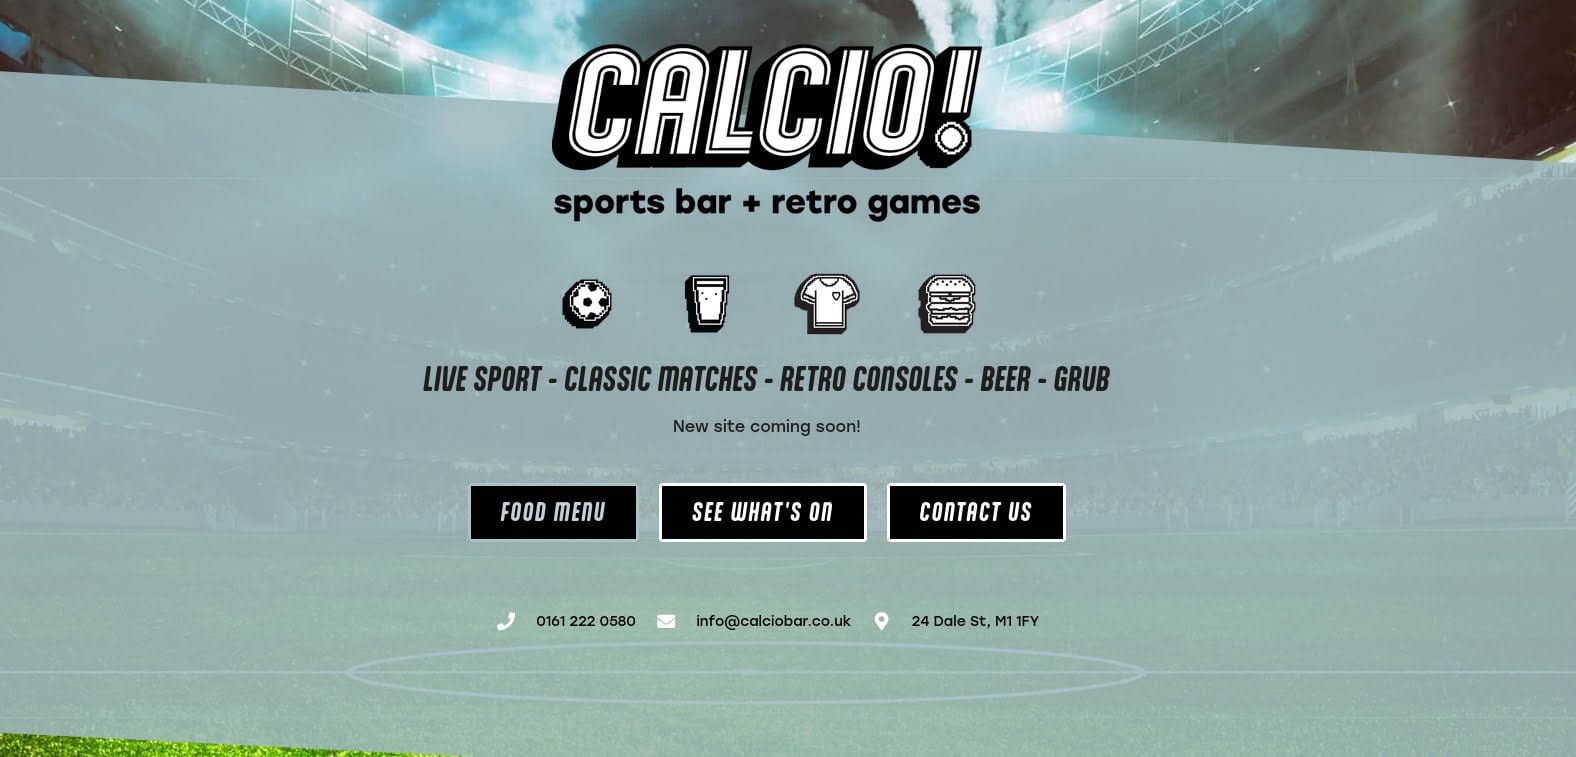 Calcio retro gaming bar